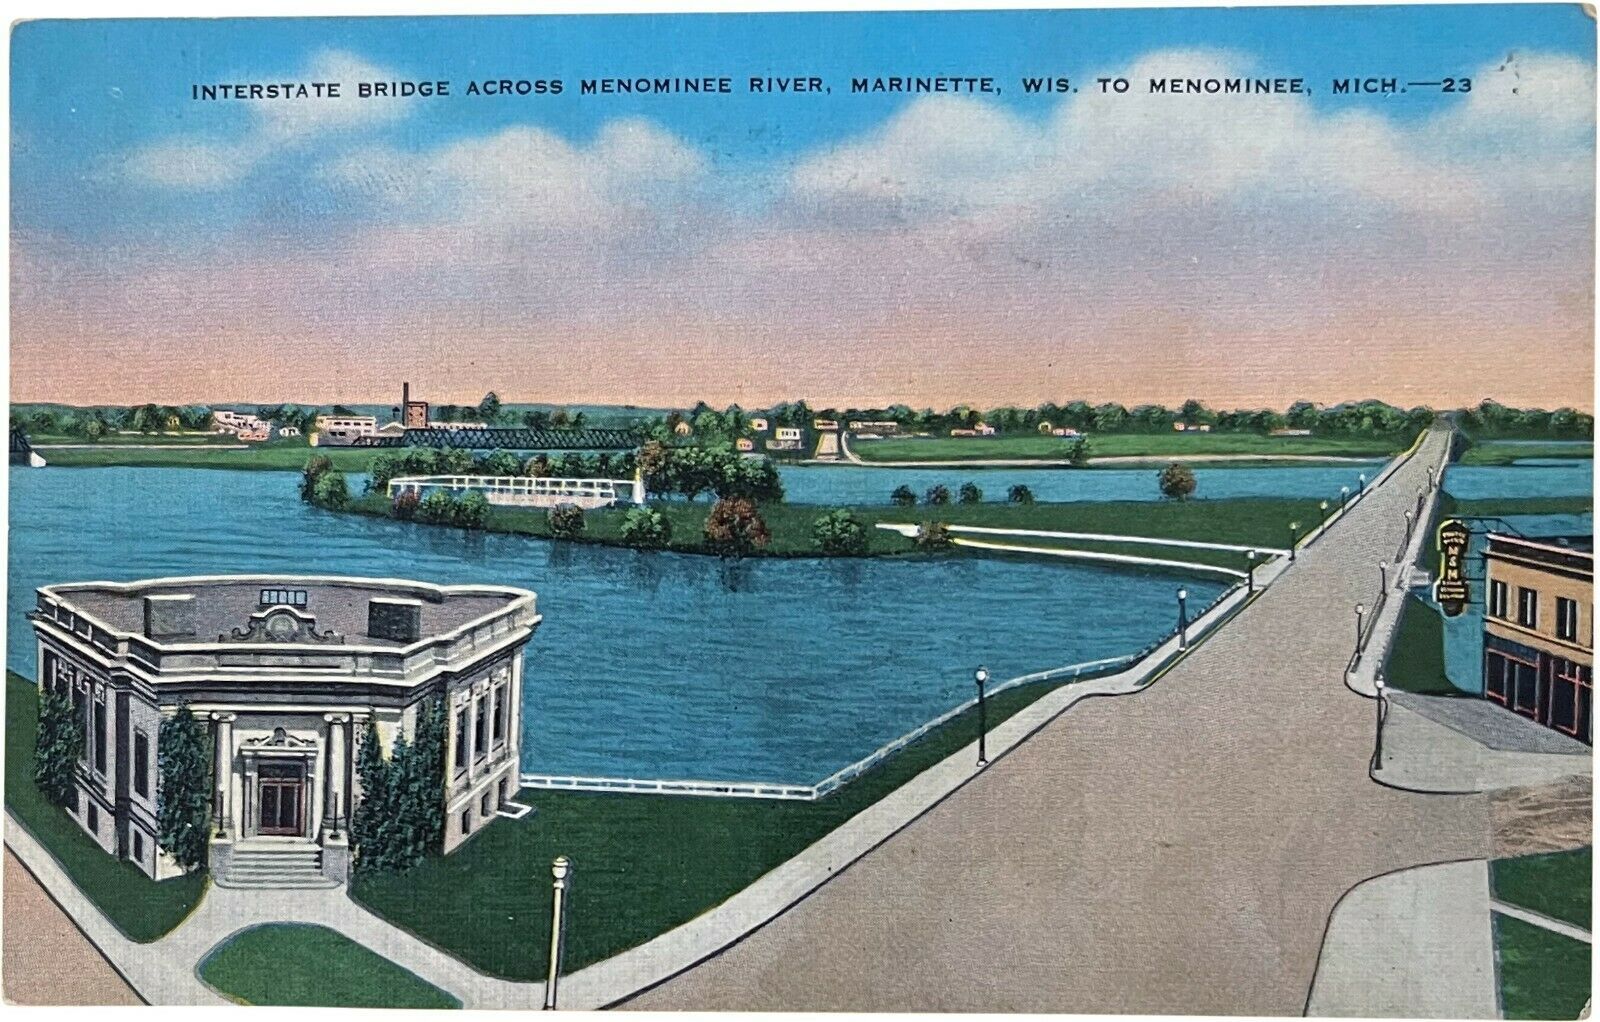 Primary image for Postcard, Interstate Bridge, Menominee River, Michigan, Marinette, Wisconsin